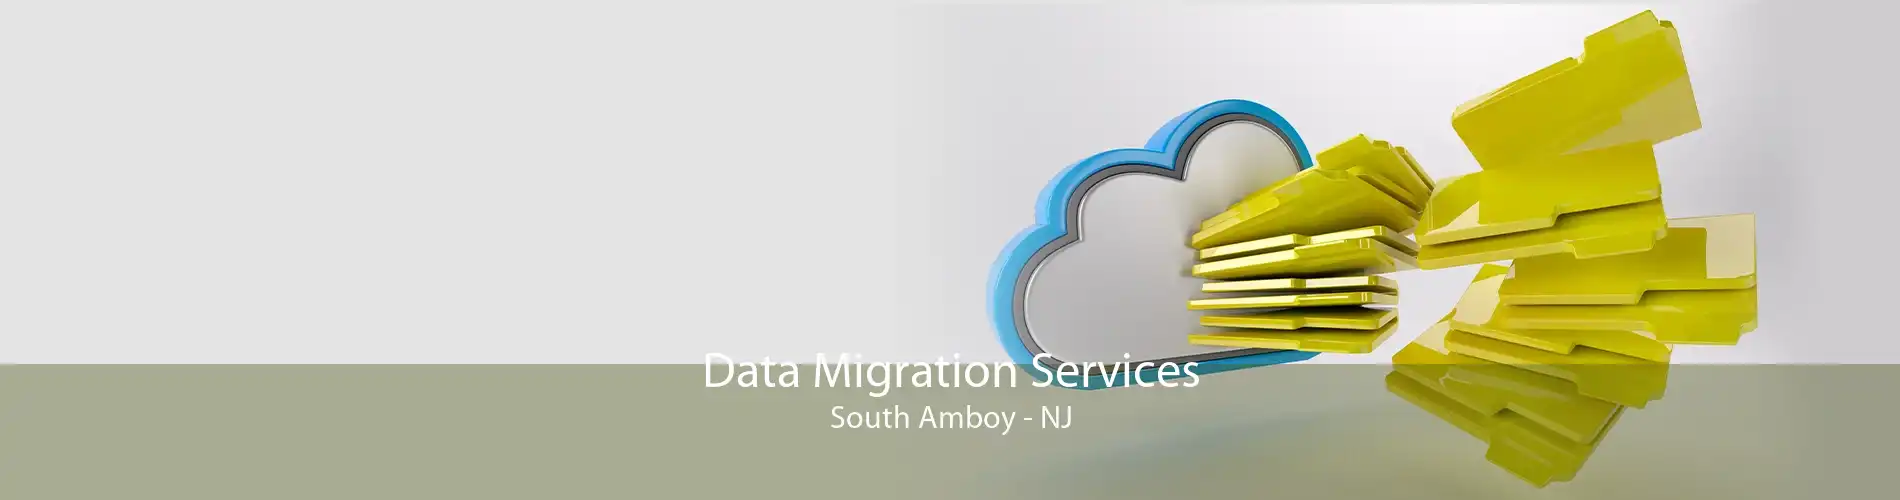 Data Migration Services South Amboy - NJ